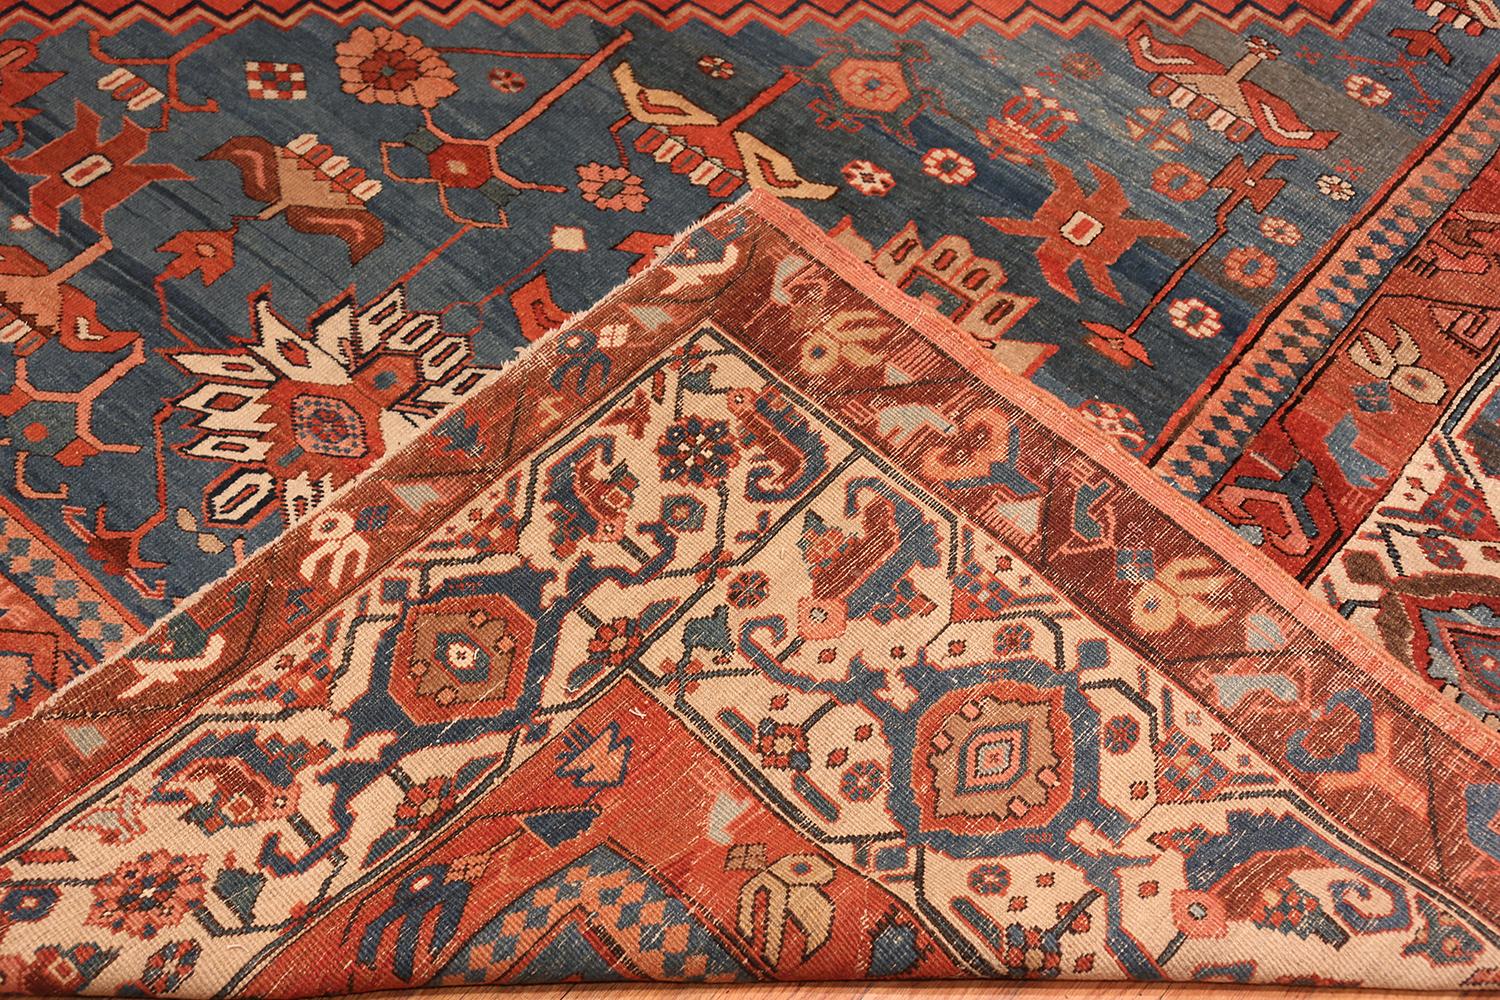 Large Antique Persian Bakshaish Rug. Size: 13 ft x 18 ft 2 in (3.96 m x 5.54 m) 1